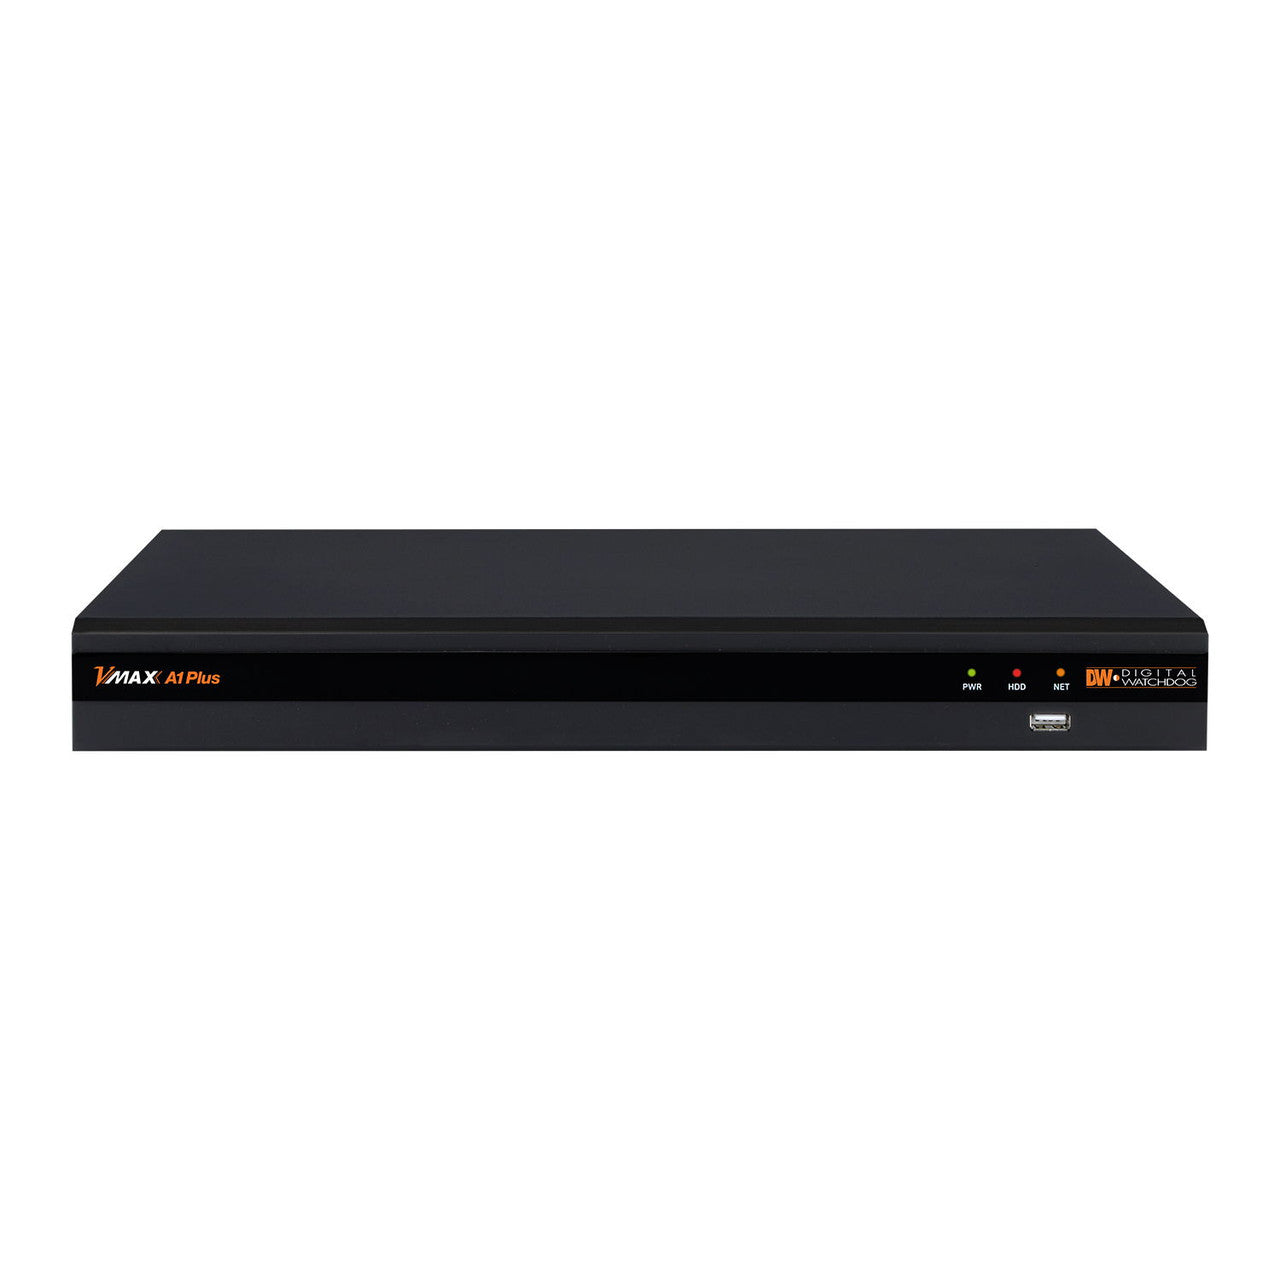 Digital Watchdog DW-VA1P163T 16-Channel DVR - 3TB HDD included, Universal HD over Coax